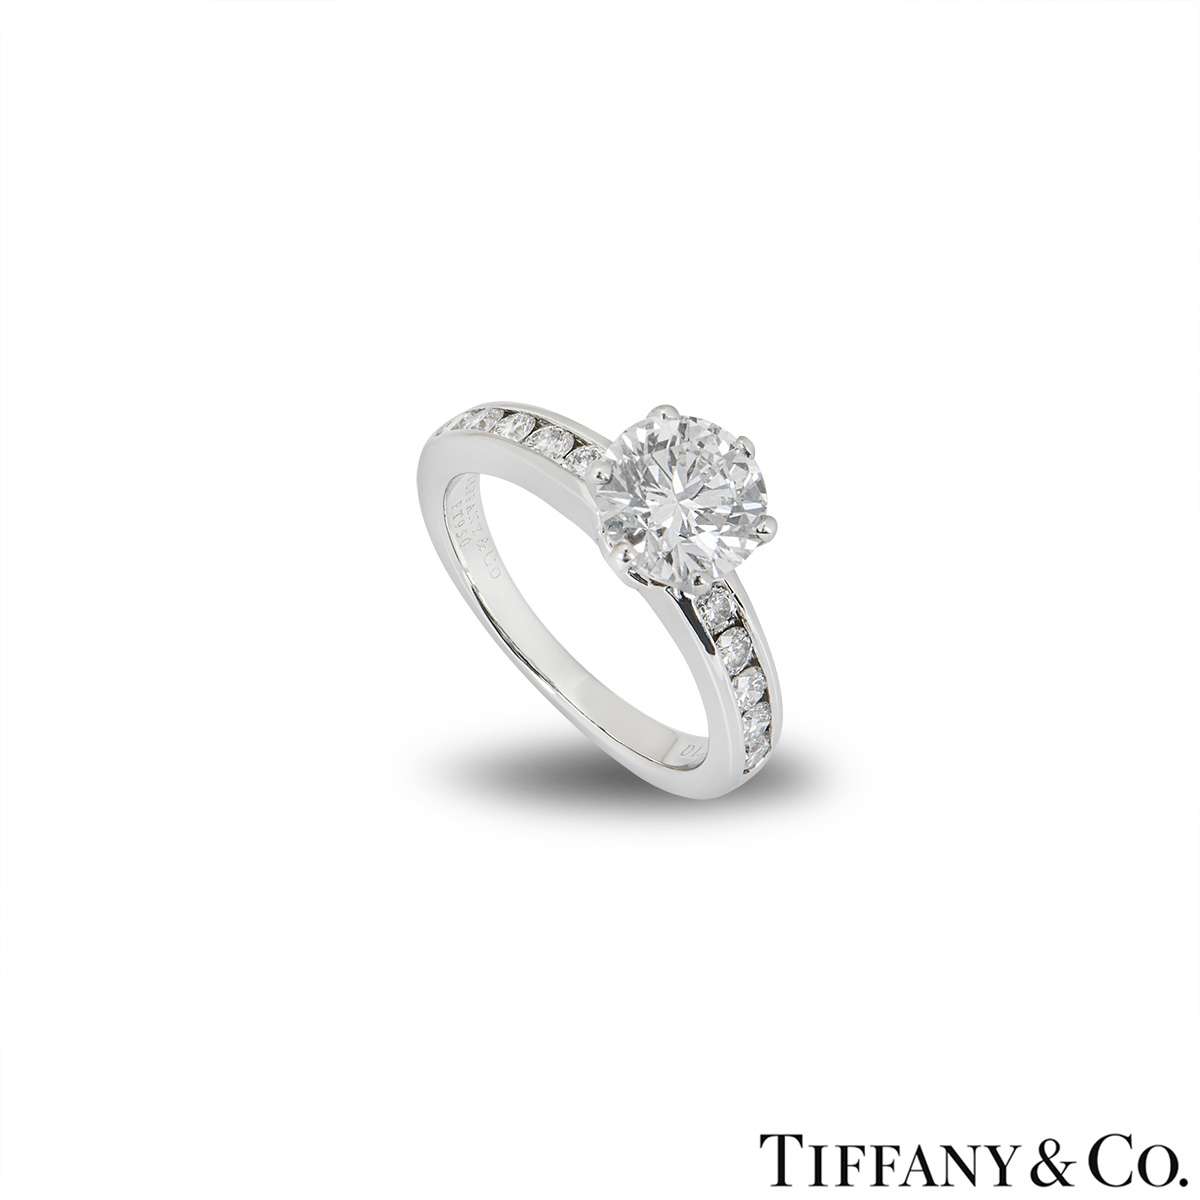 Tiffany & Co. Platinum Diamond Ring 1.28ct G/VVS2